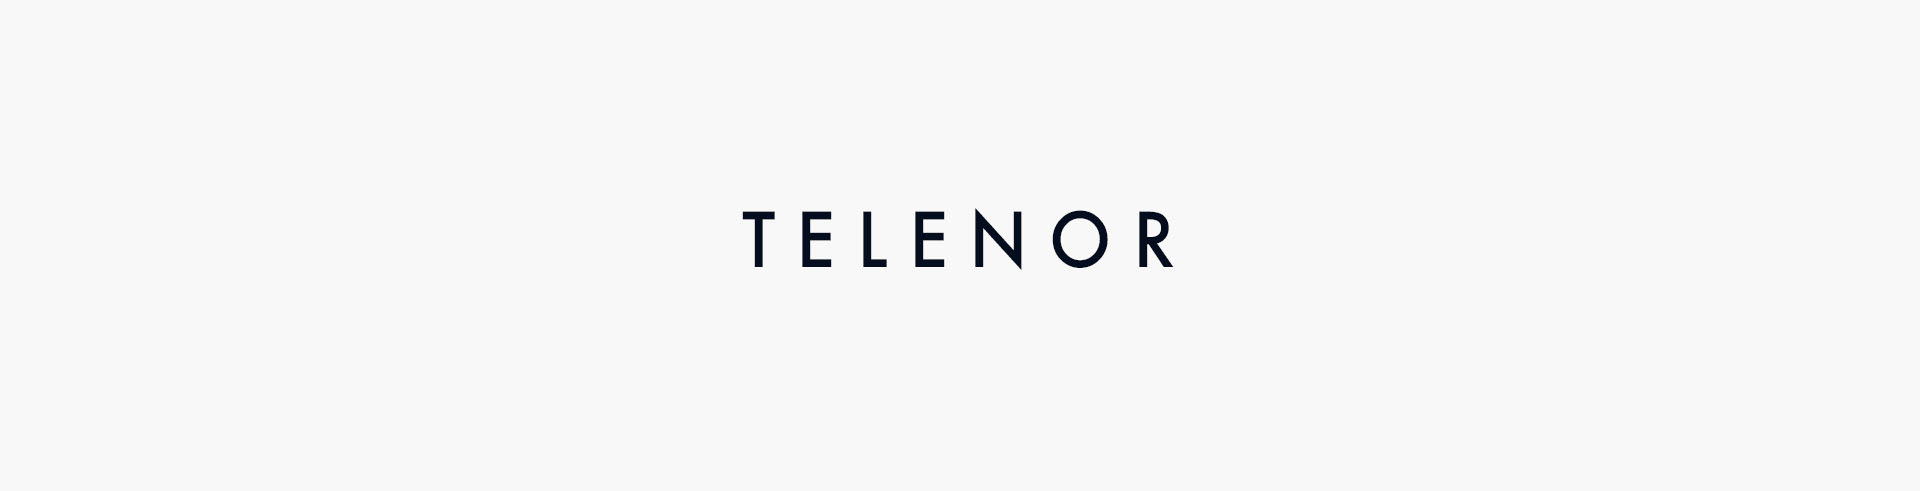 Telenor - Security in a Digital Workplace on Behance3ec5e791191431.5e41a3fc5e2a3.jpg